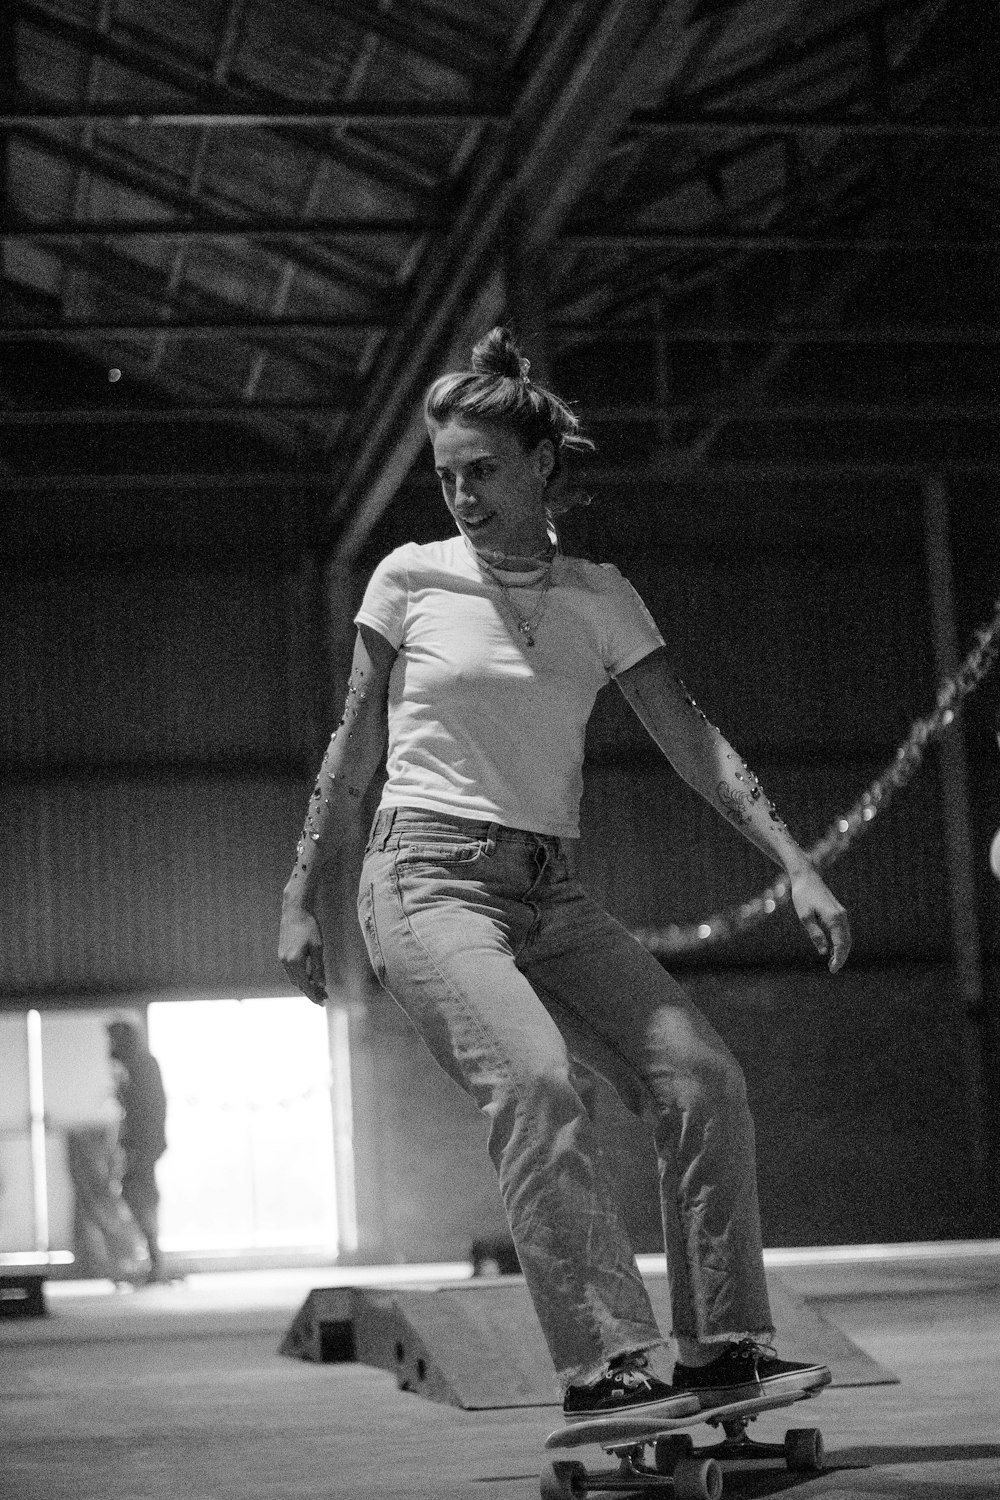 a woman riding a skateboard inside of a warehouse